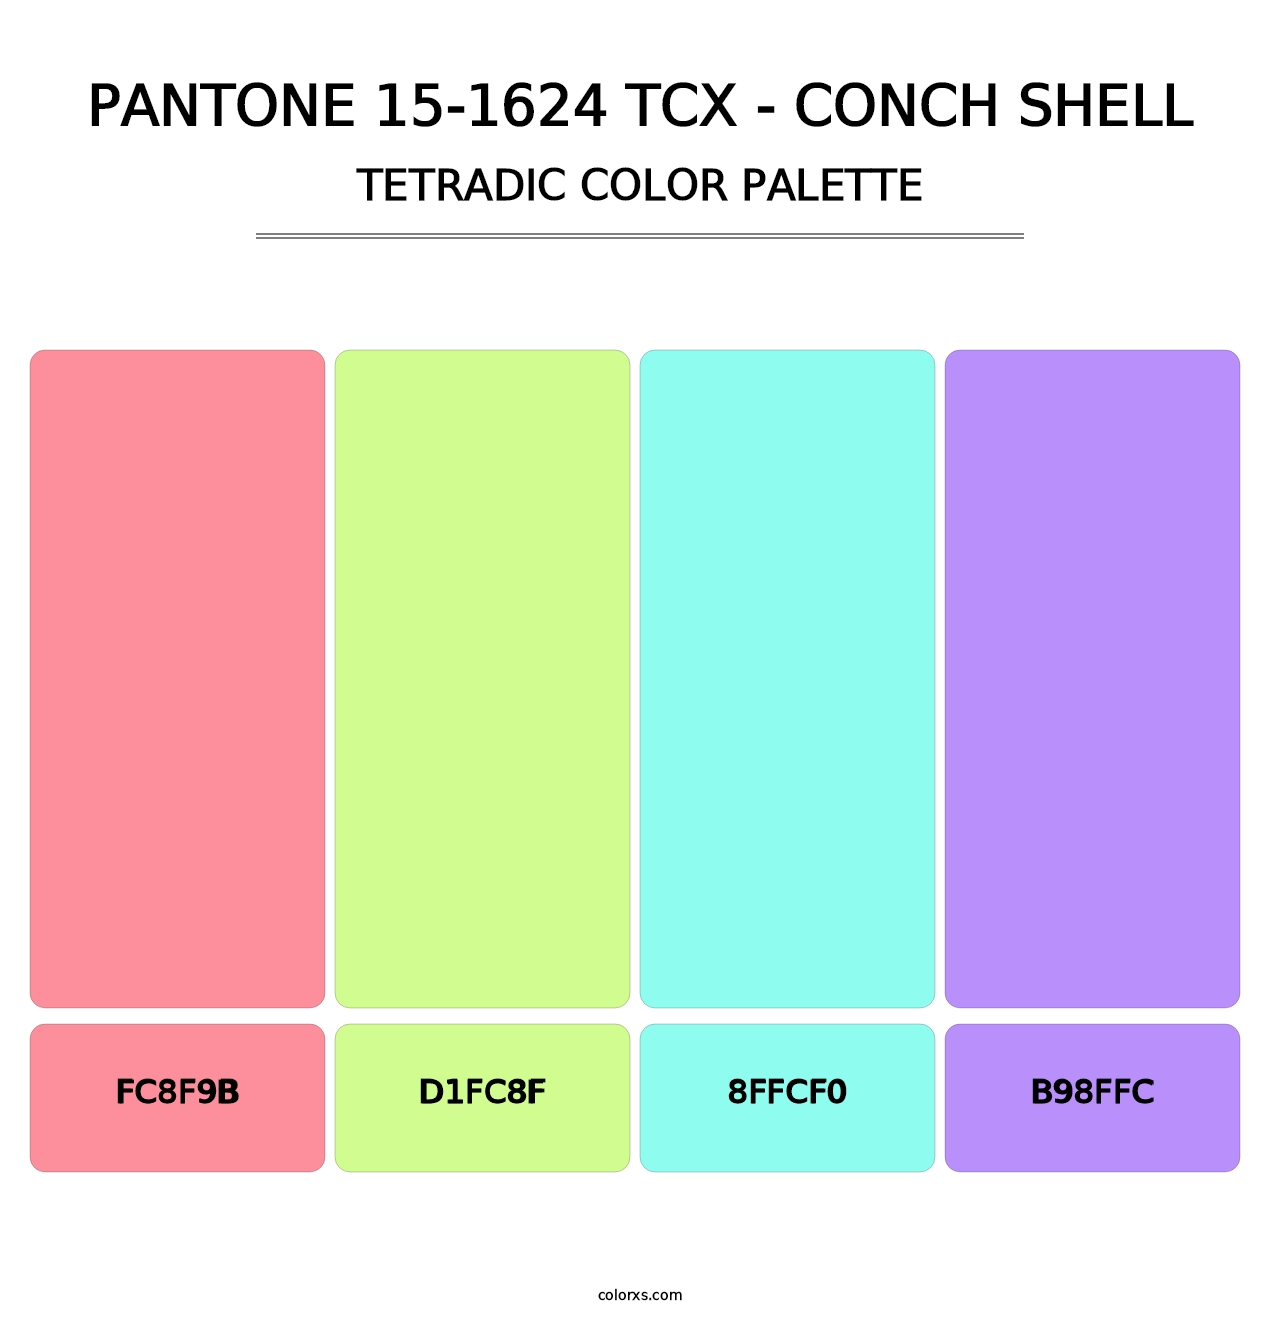 PANTONE 15-1624 TCX - Conch Shell - Tetradic Color Palette